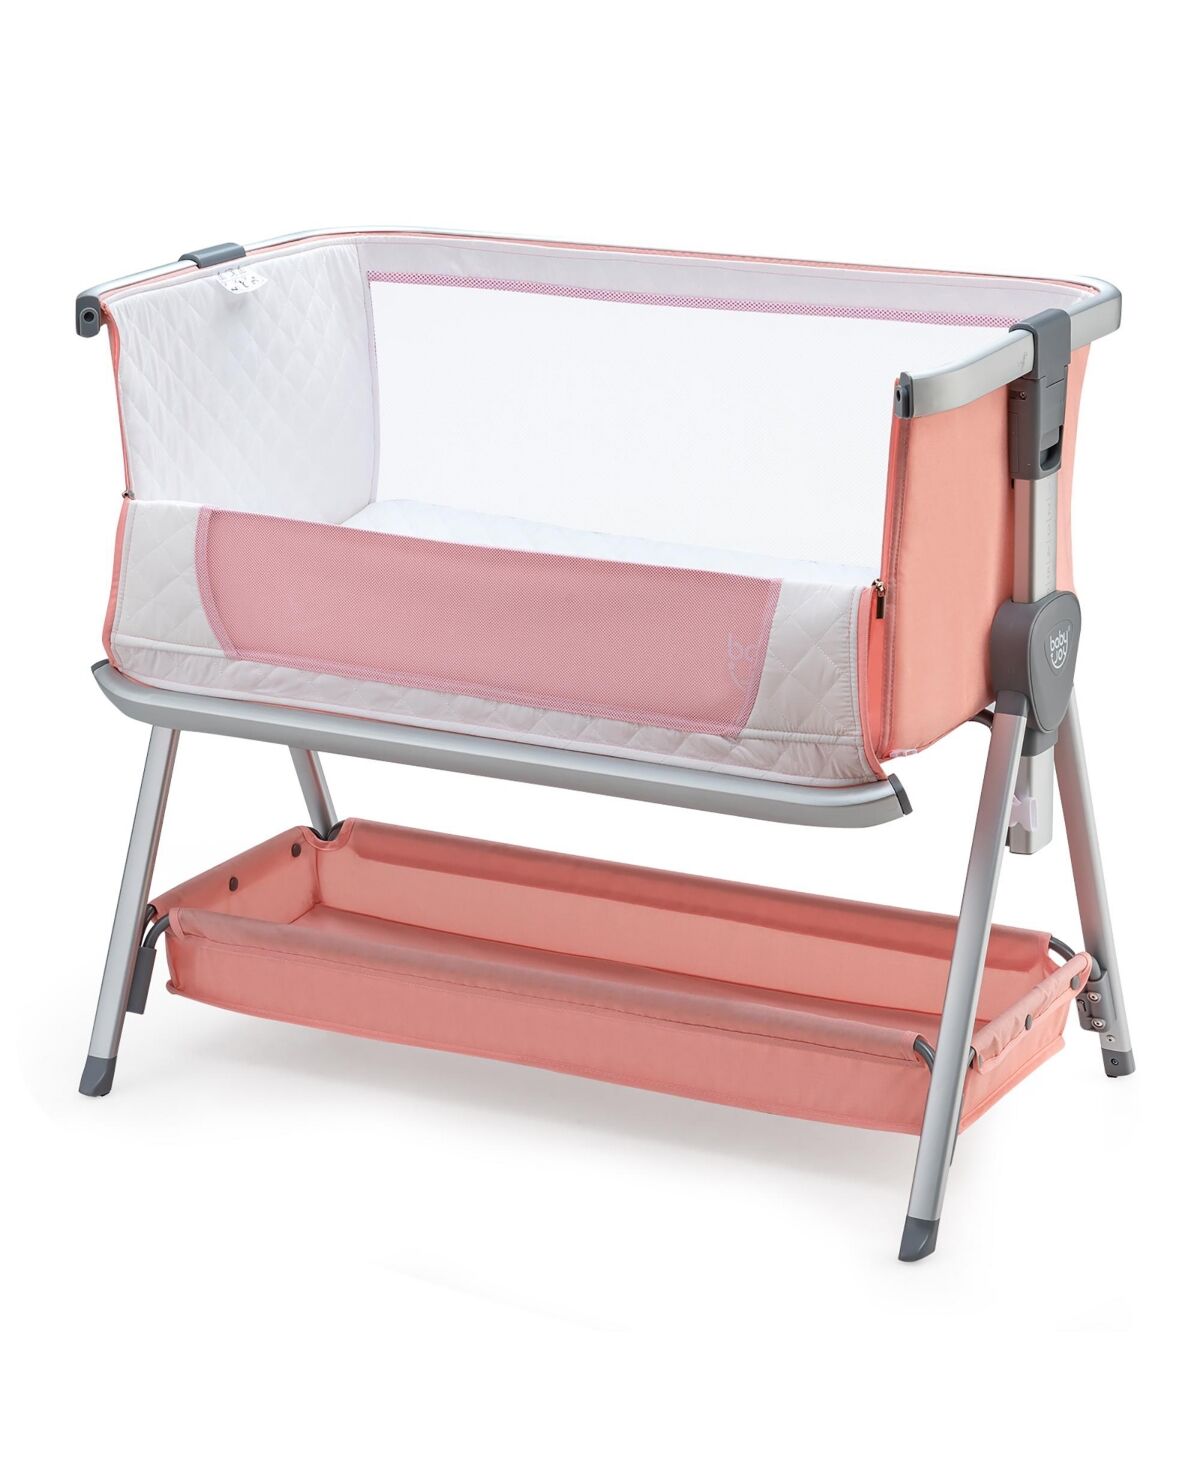 Costway Baby Bed Side Crib Portable Adjustable Infant Travel Sleeper Bassinet - Pink